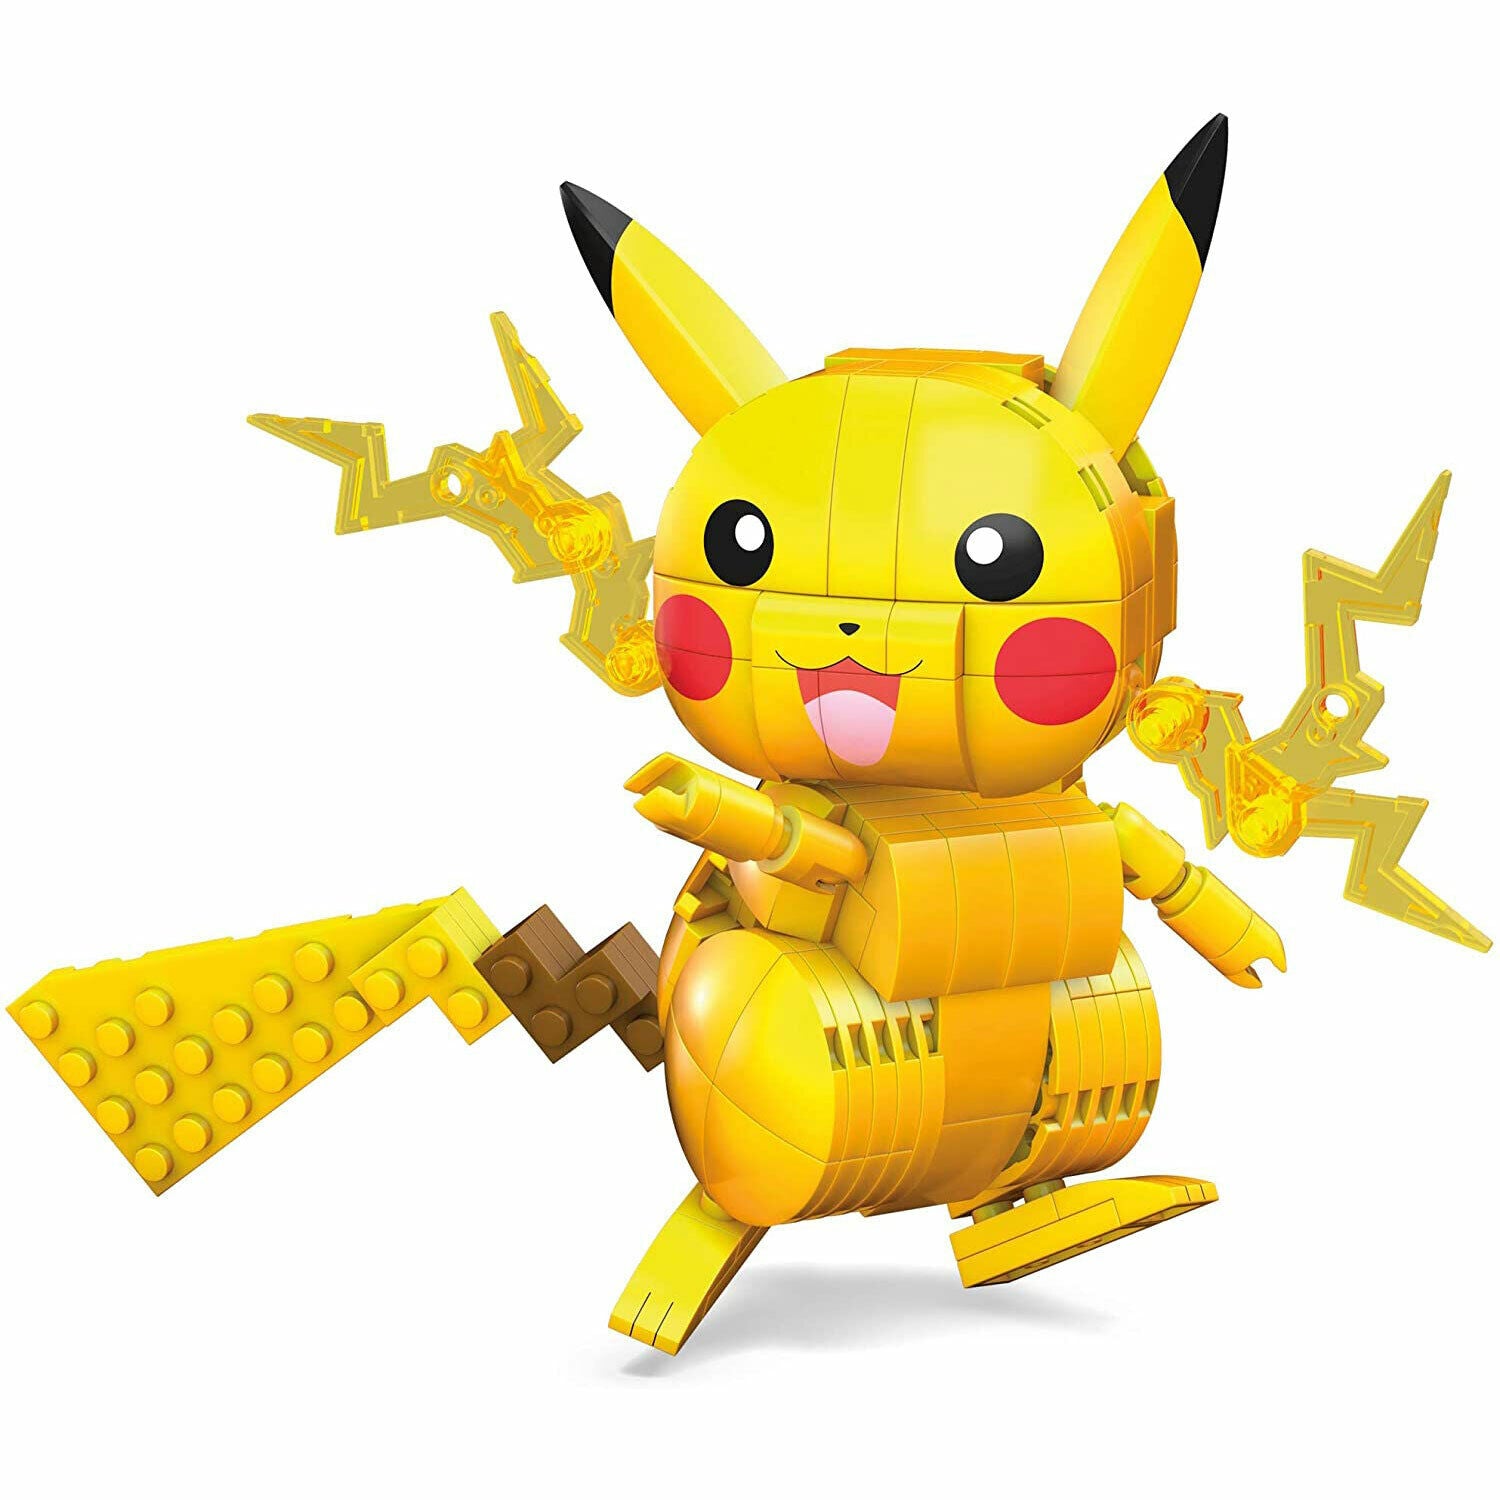 New Mega Construx Pokemon Pikachu Set - Build Your Own Pikachu!